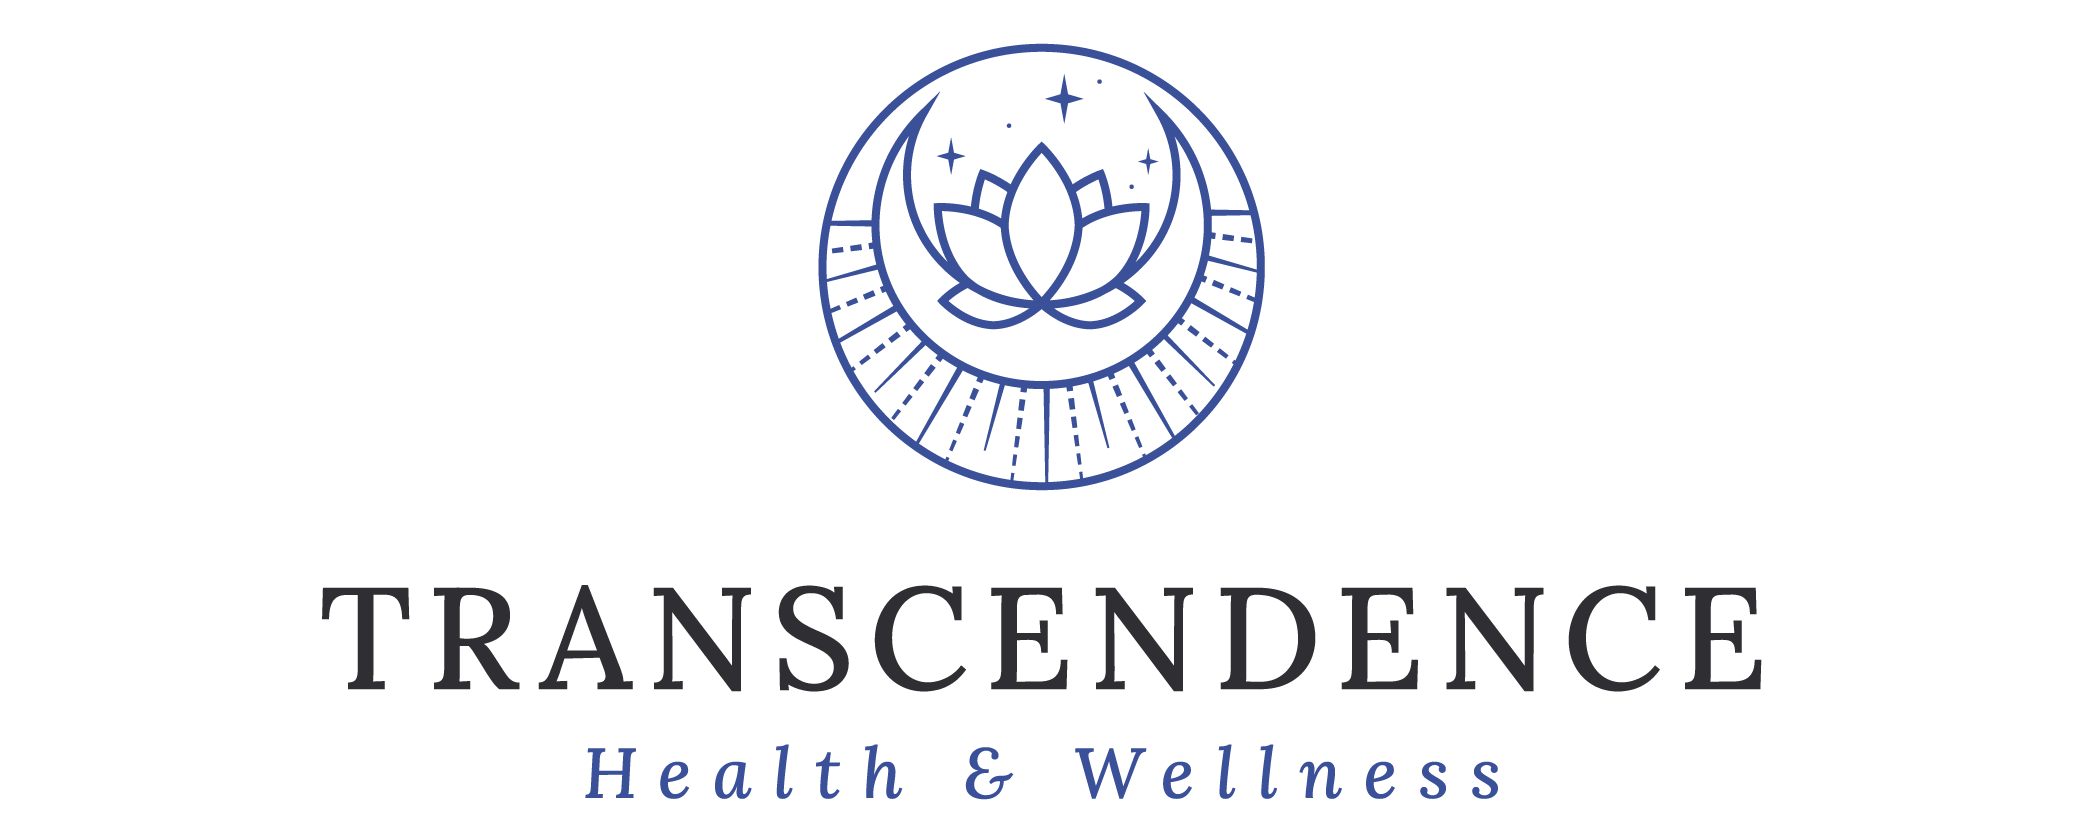 Transcendence - Logo 1.1